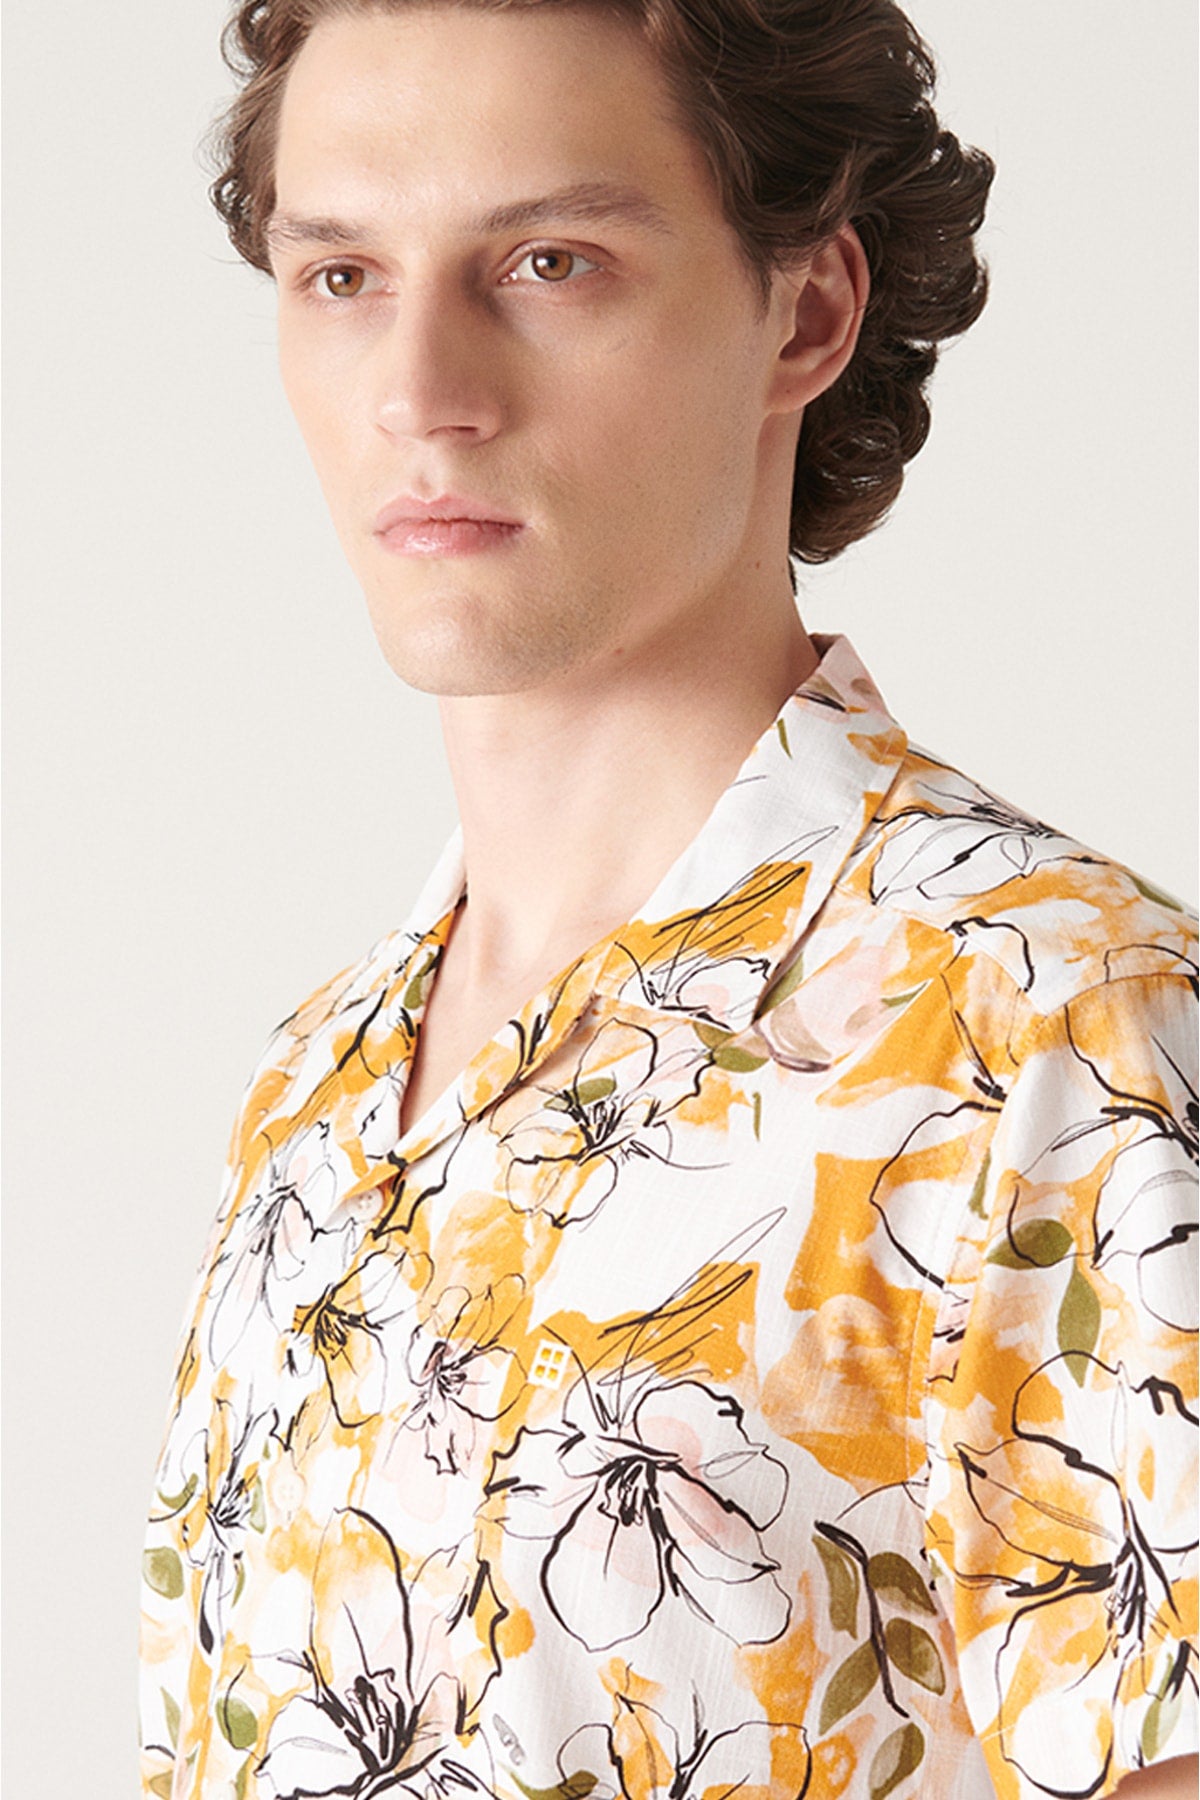 Men's Orange Flower Printed Short Arm Cotton Shirt A21y2112